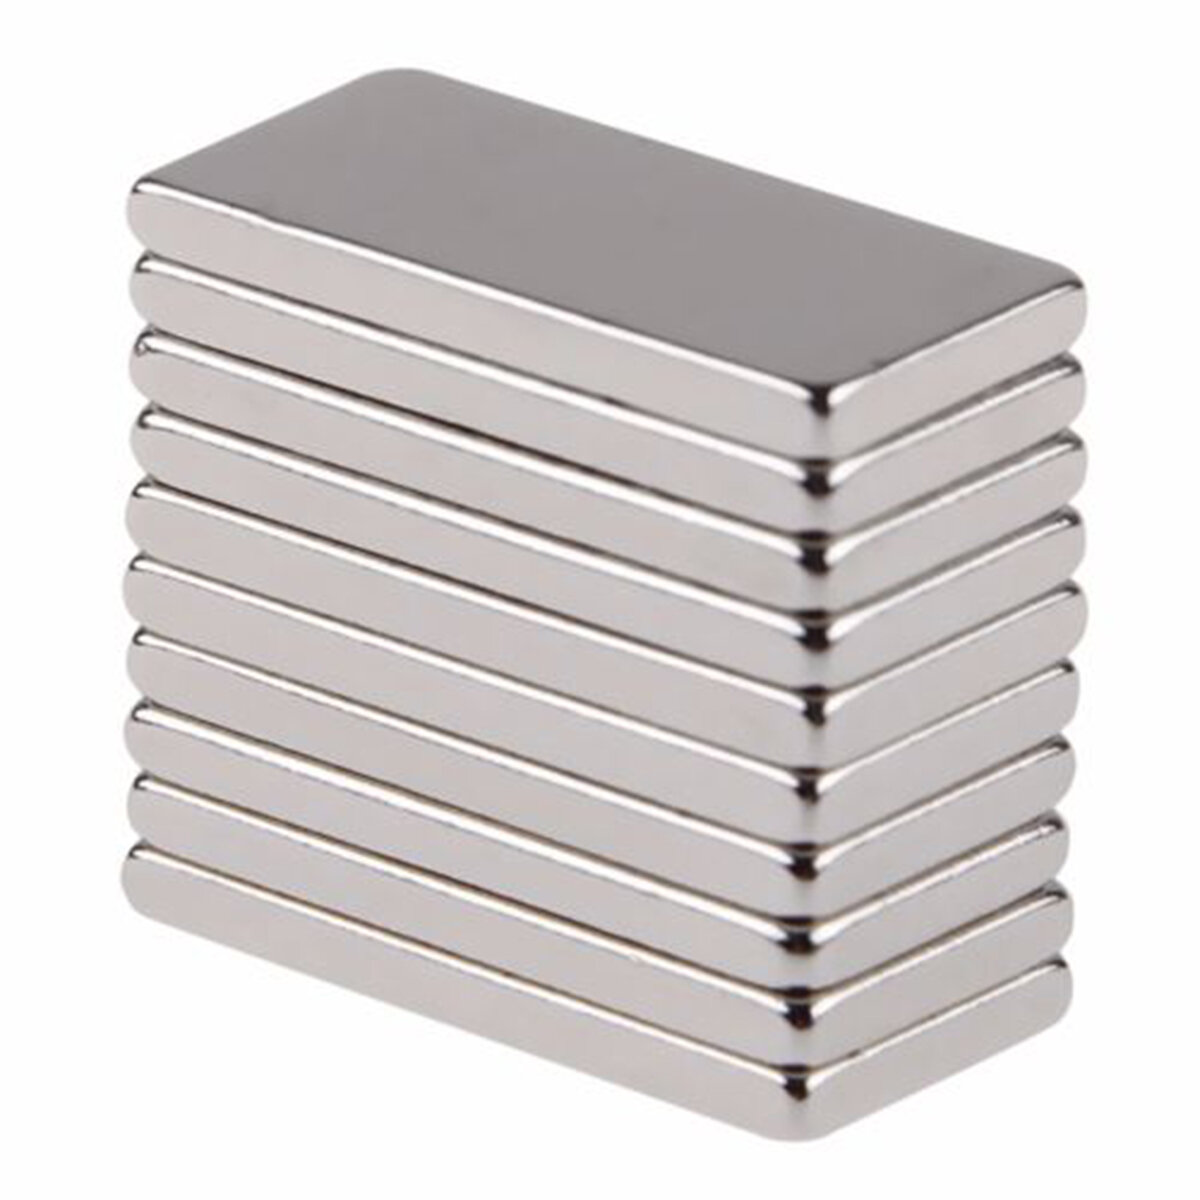 

10pcs N50 20x10x2mm Block Neodymium Magnet Oblong Super Strong Rare Earth Magnets